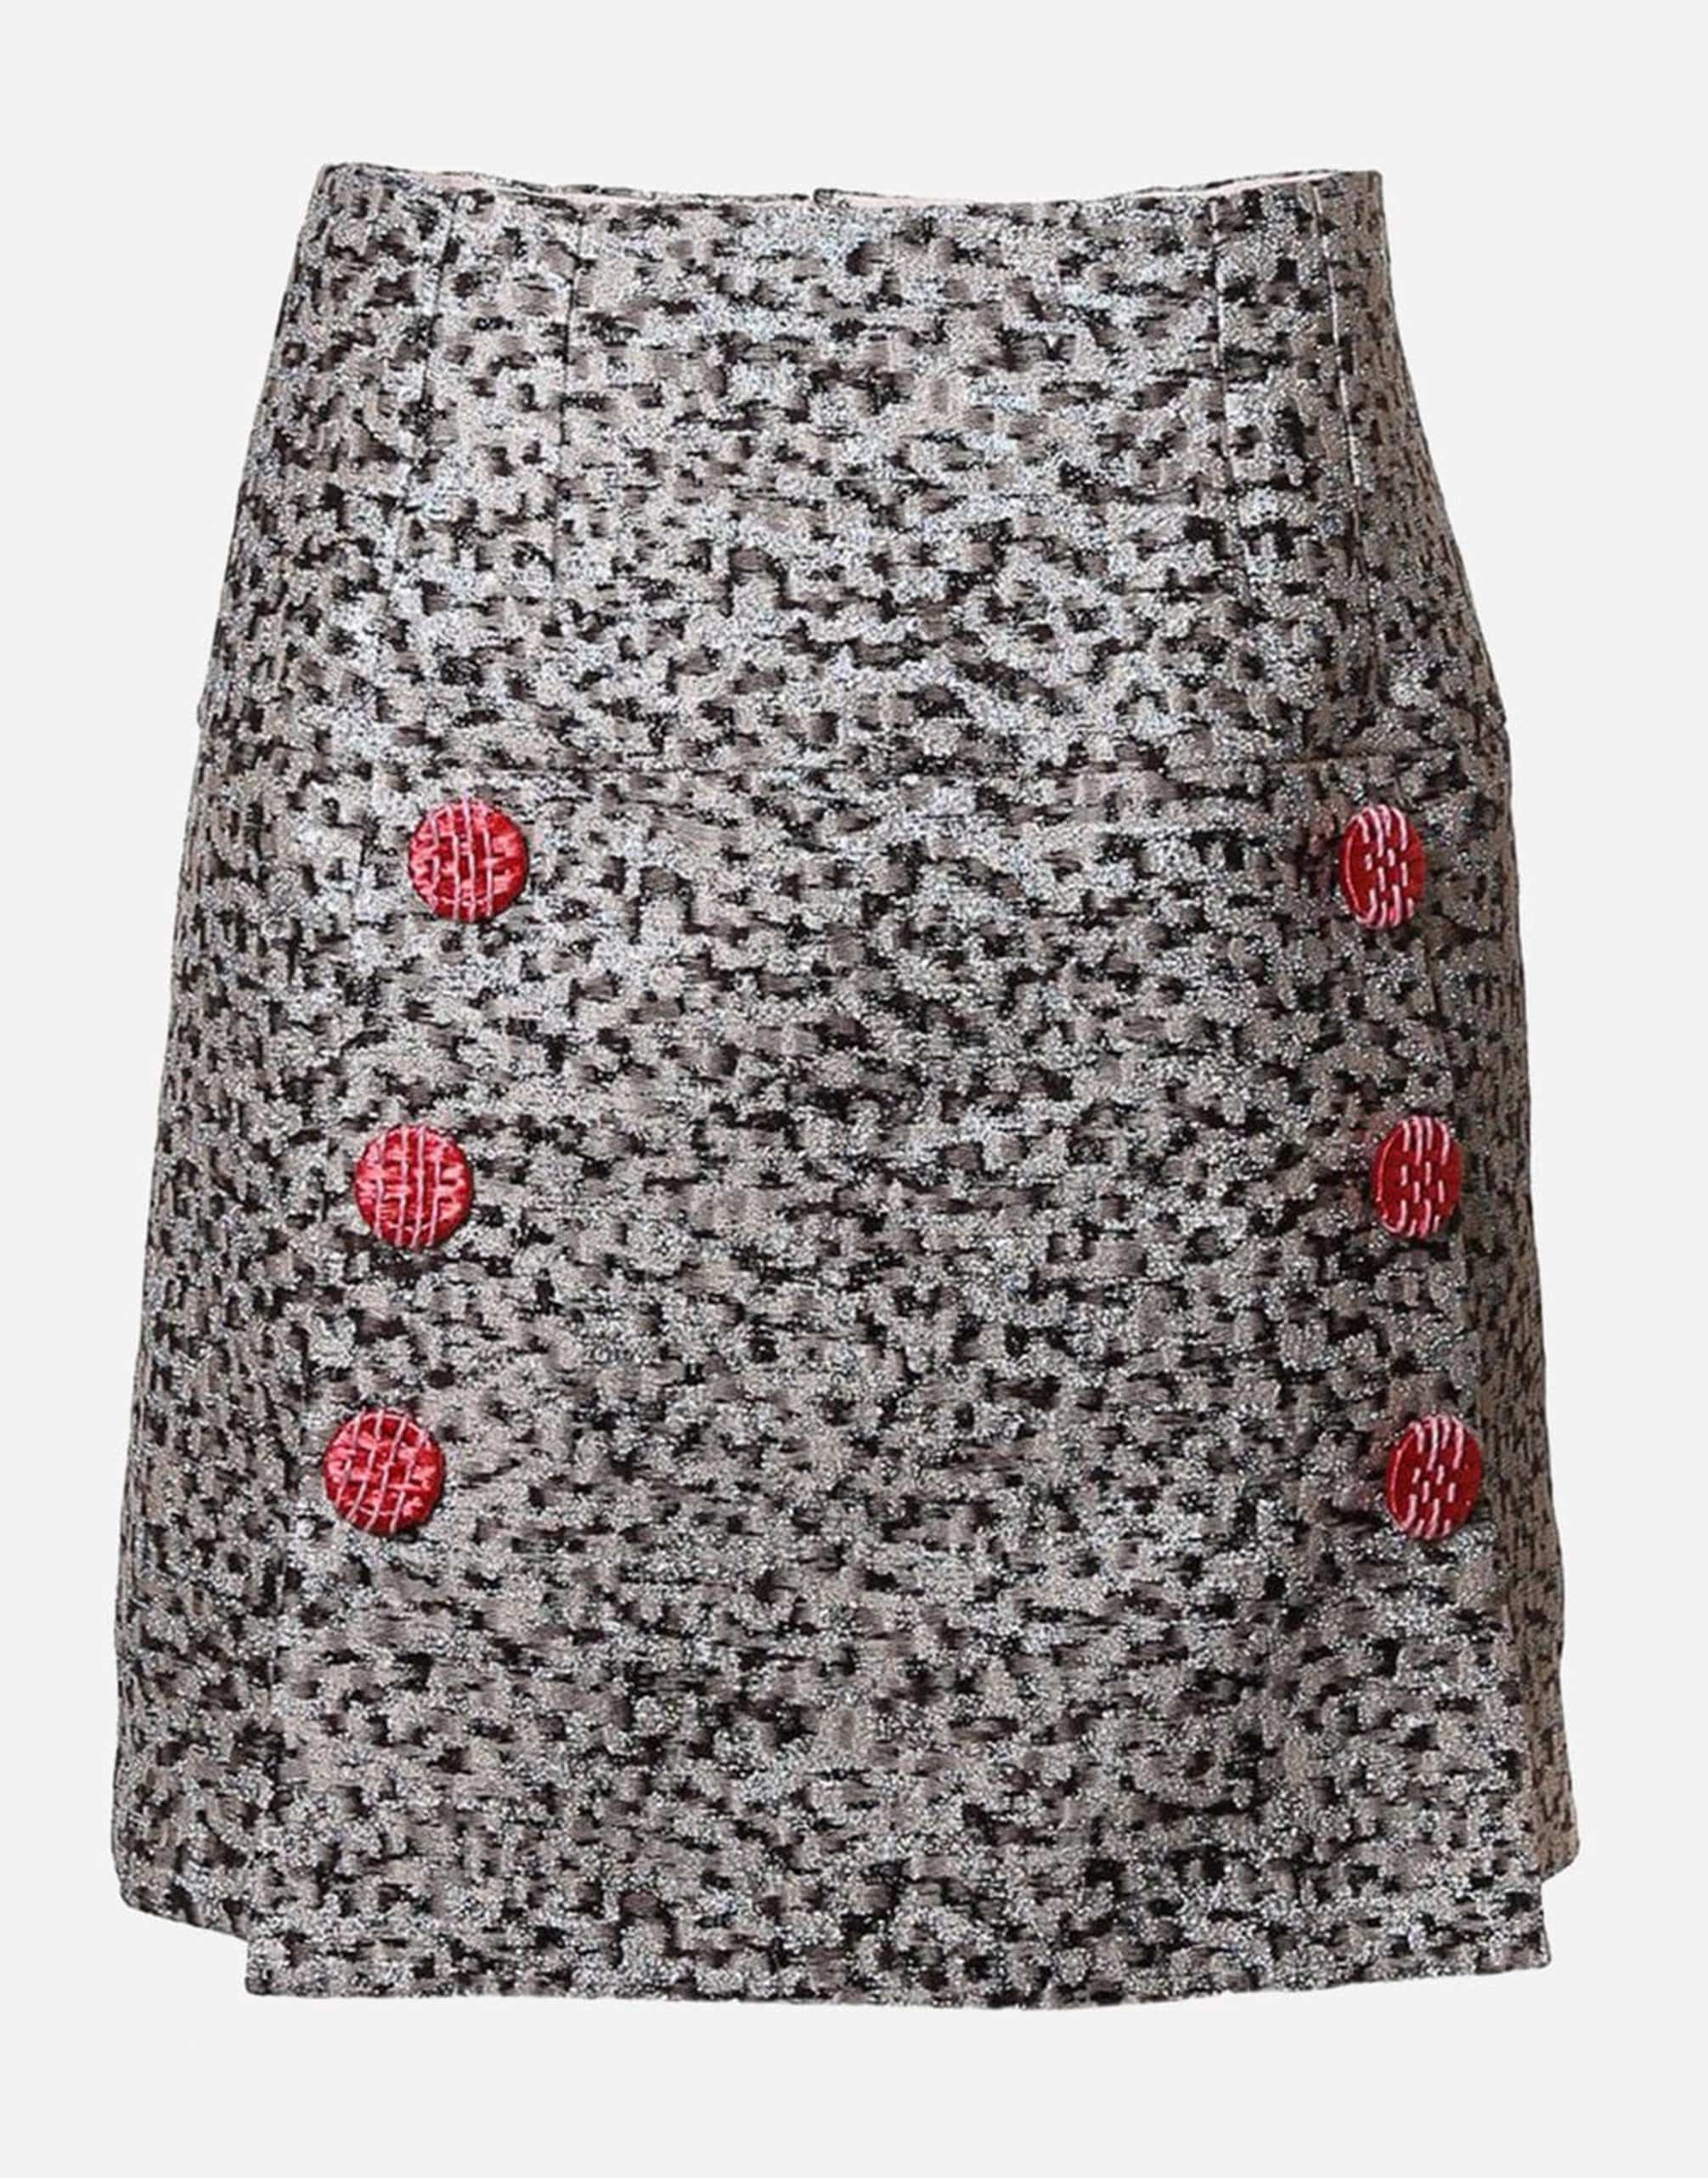 Dolce & Gabbana Jacquard Laminate Mini Skirt